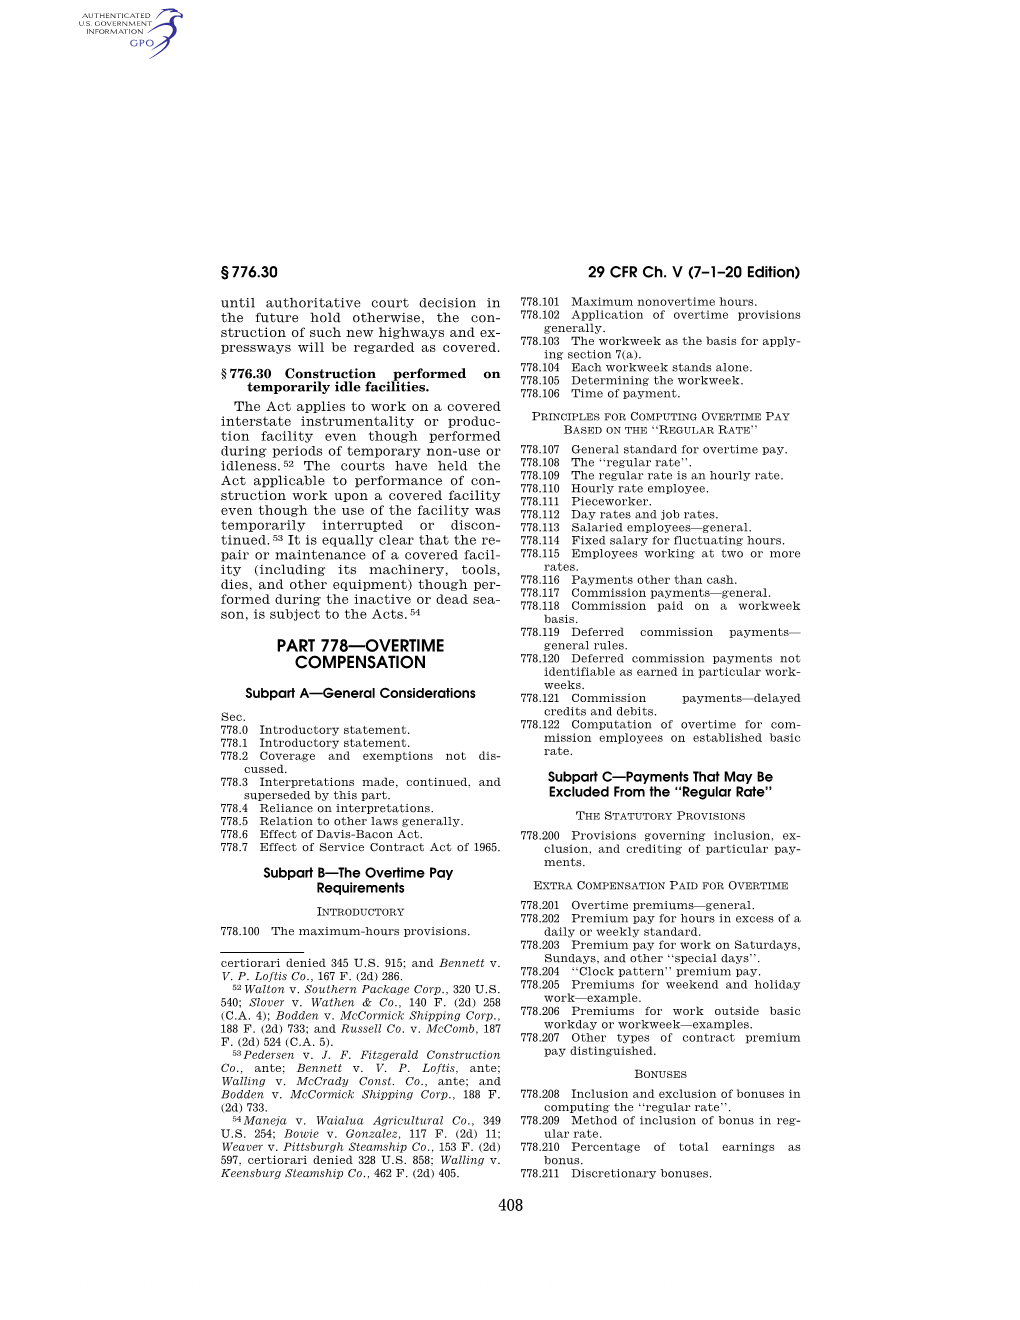 29 CFR Ch. V (7–1–20 Edition) § 778.104